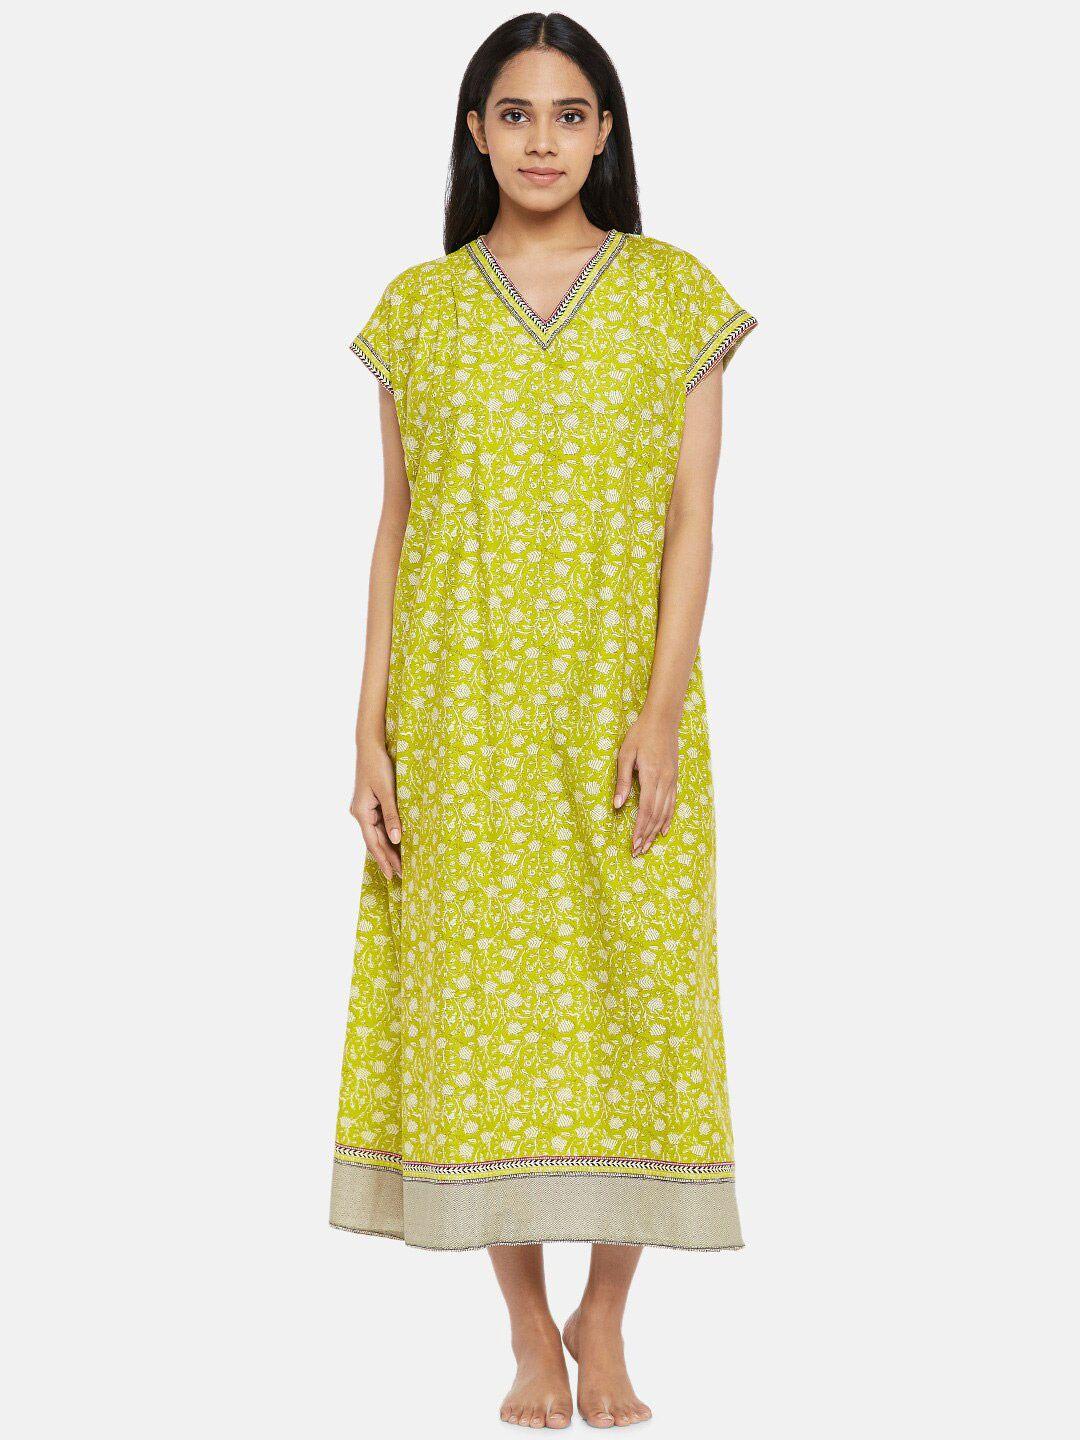 rangmanch by pantaloons women lime green pure cotton printed nightdress